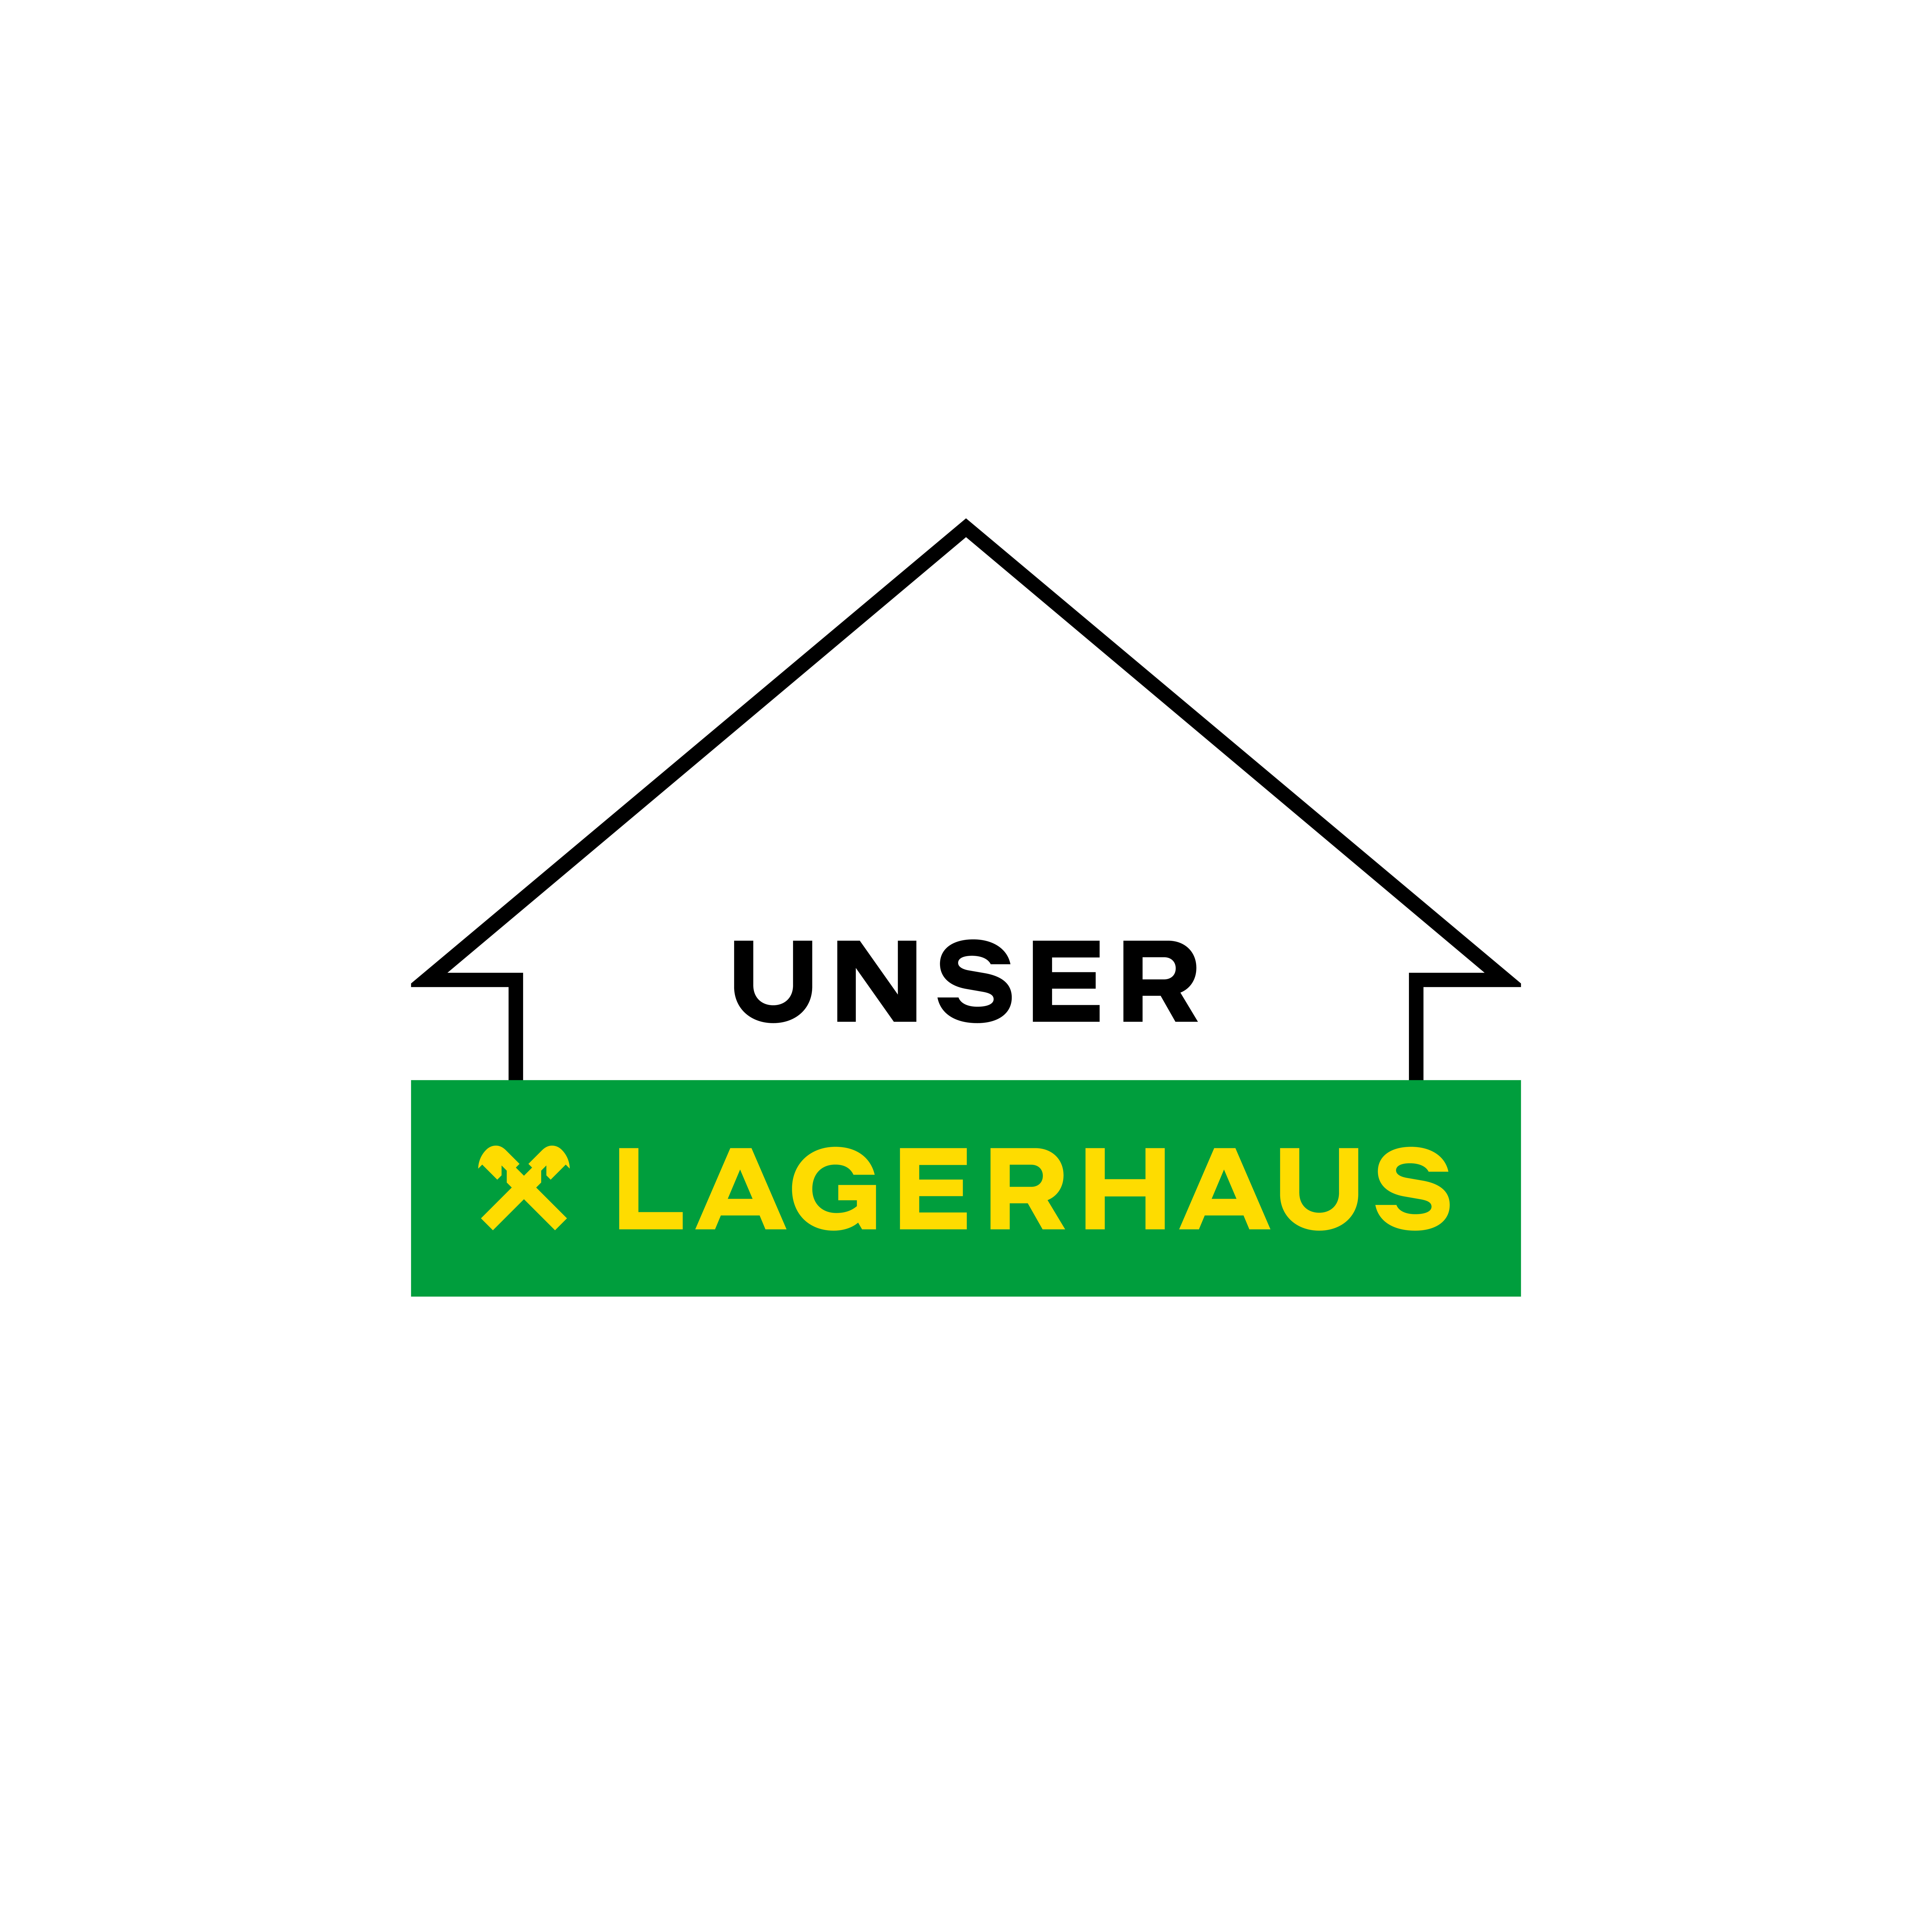 UNSER LAGERHAUS Warenhandels GmbH Logo